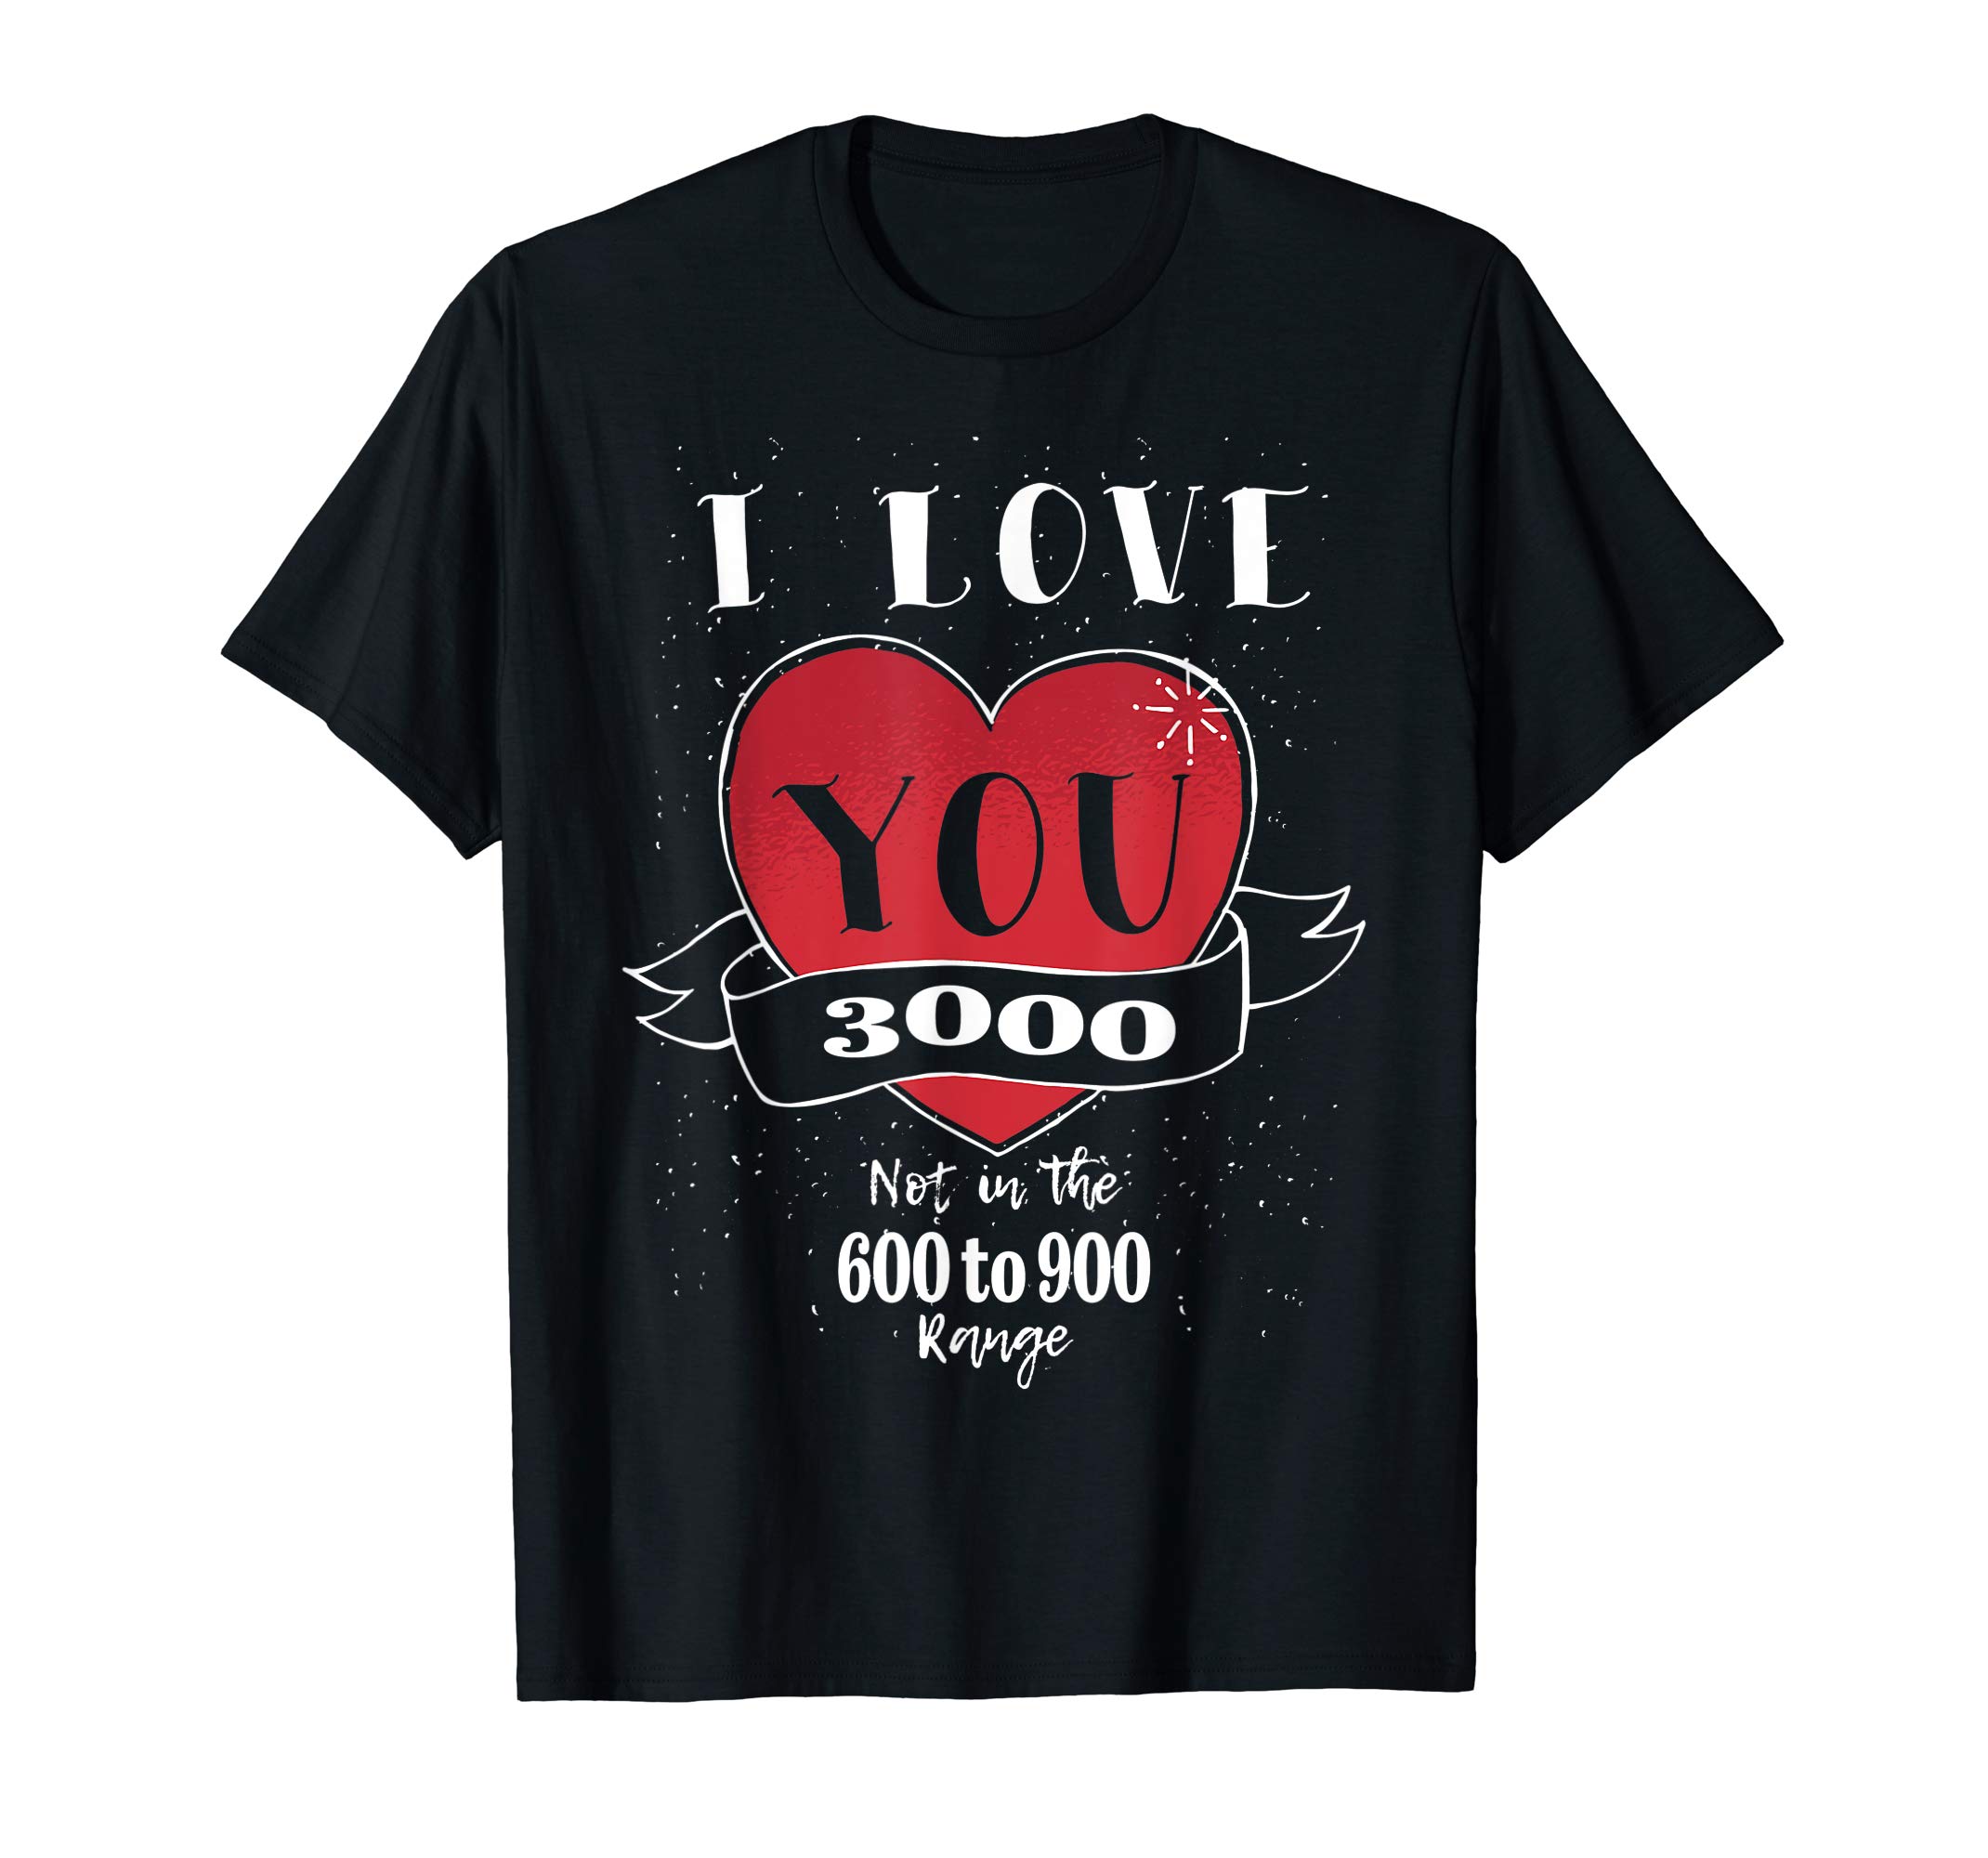 I love you 3000 - endgame T-Shirt